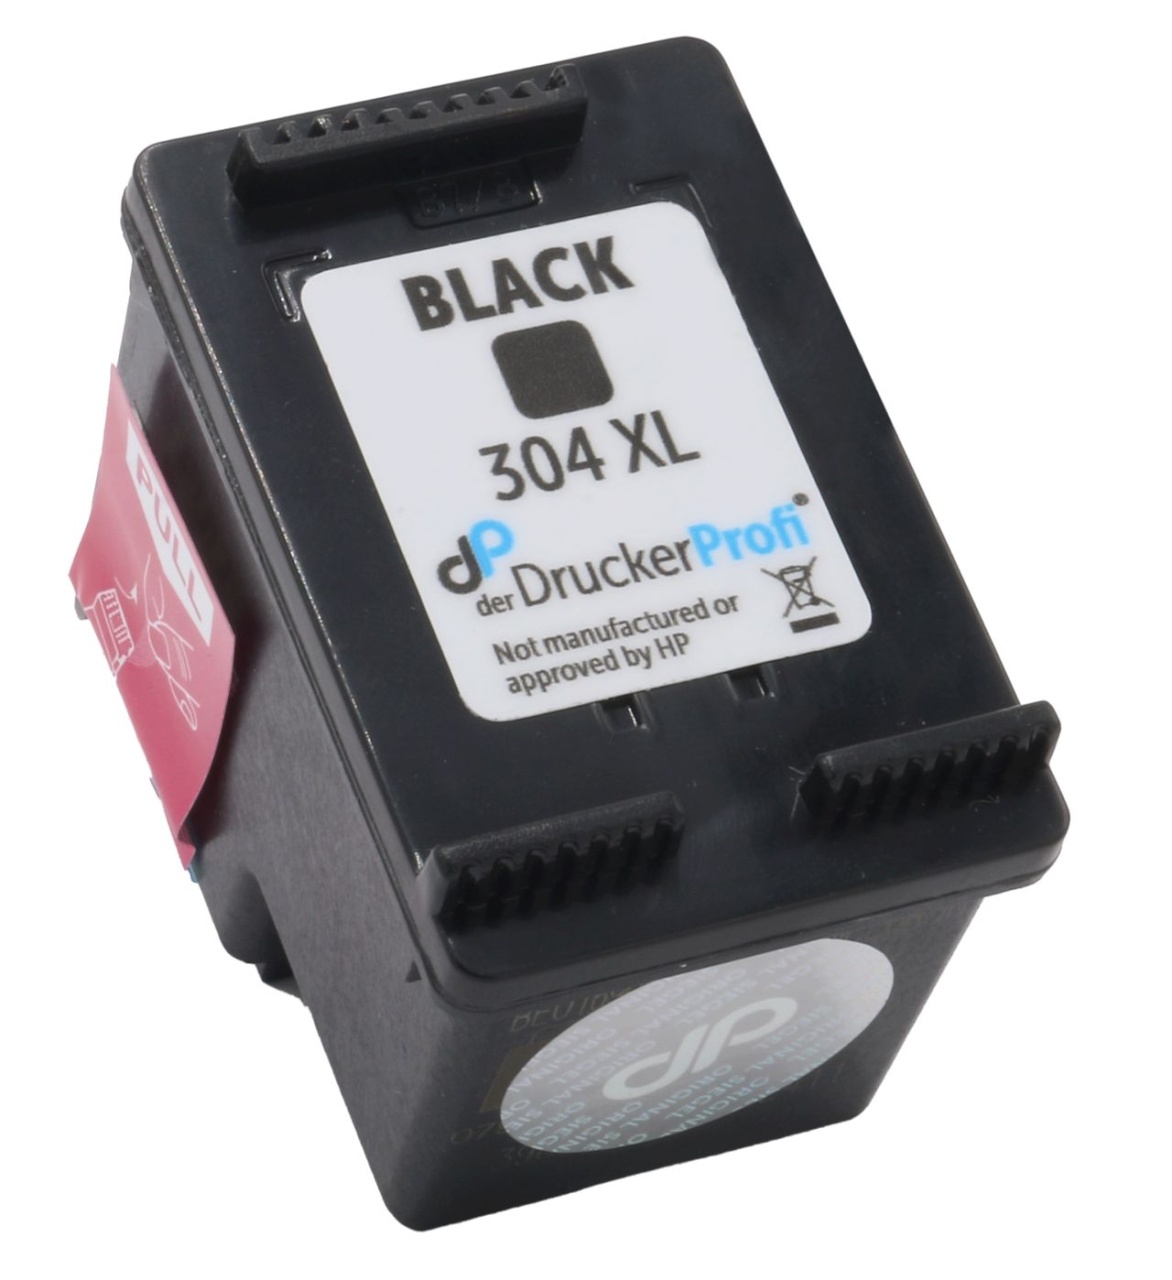 Kompatibel zu XL Der HP color schwarz Tinte - DruckerProfi Multipack 304 